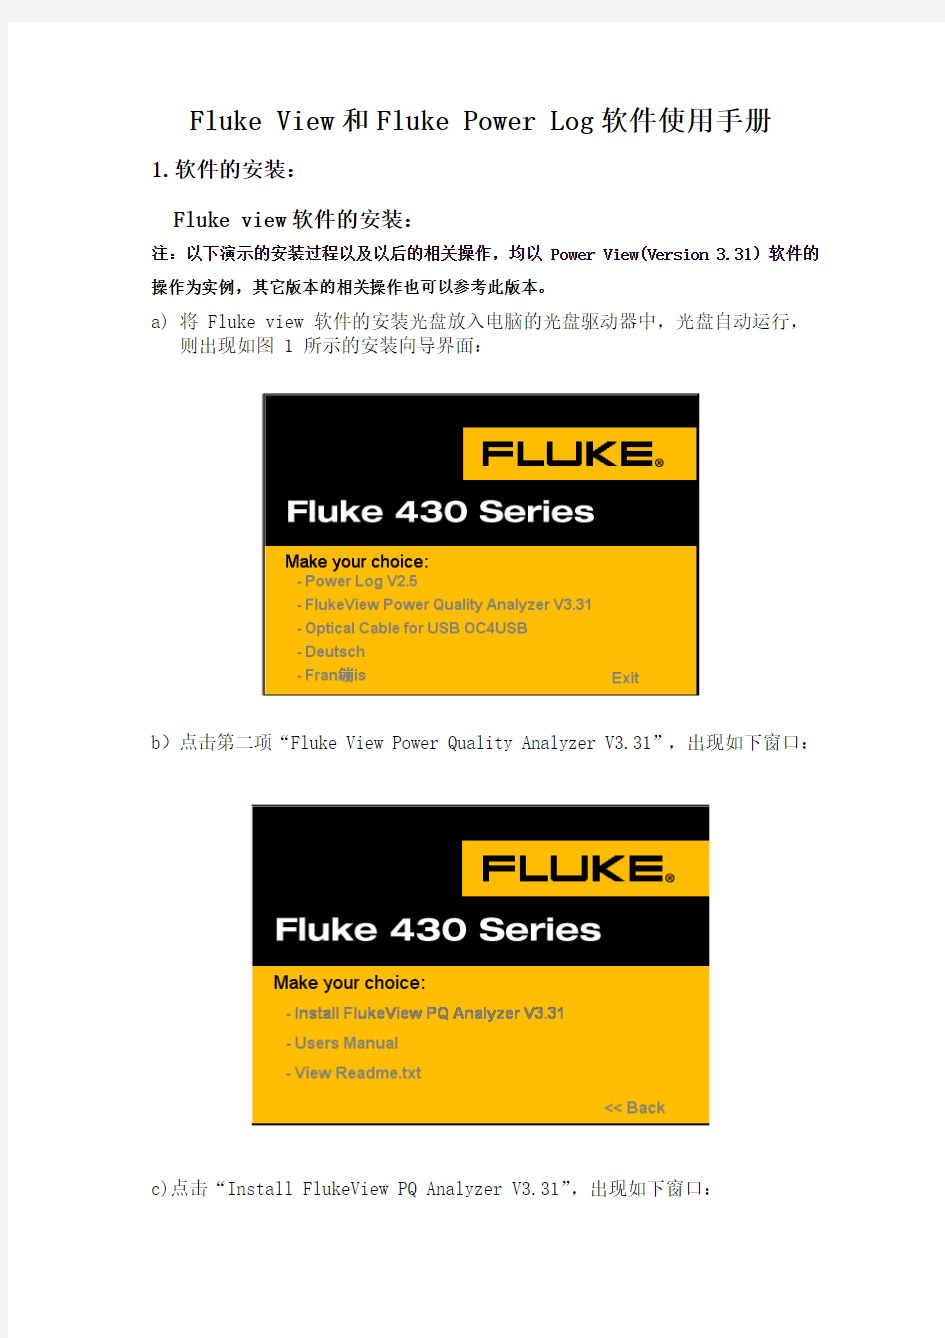 Fluke应用软件中文说明